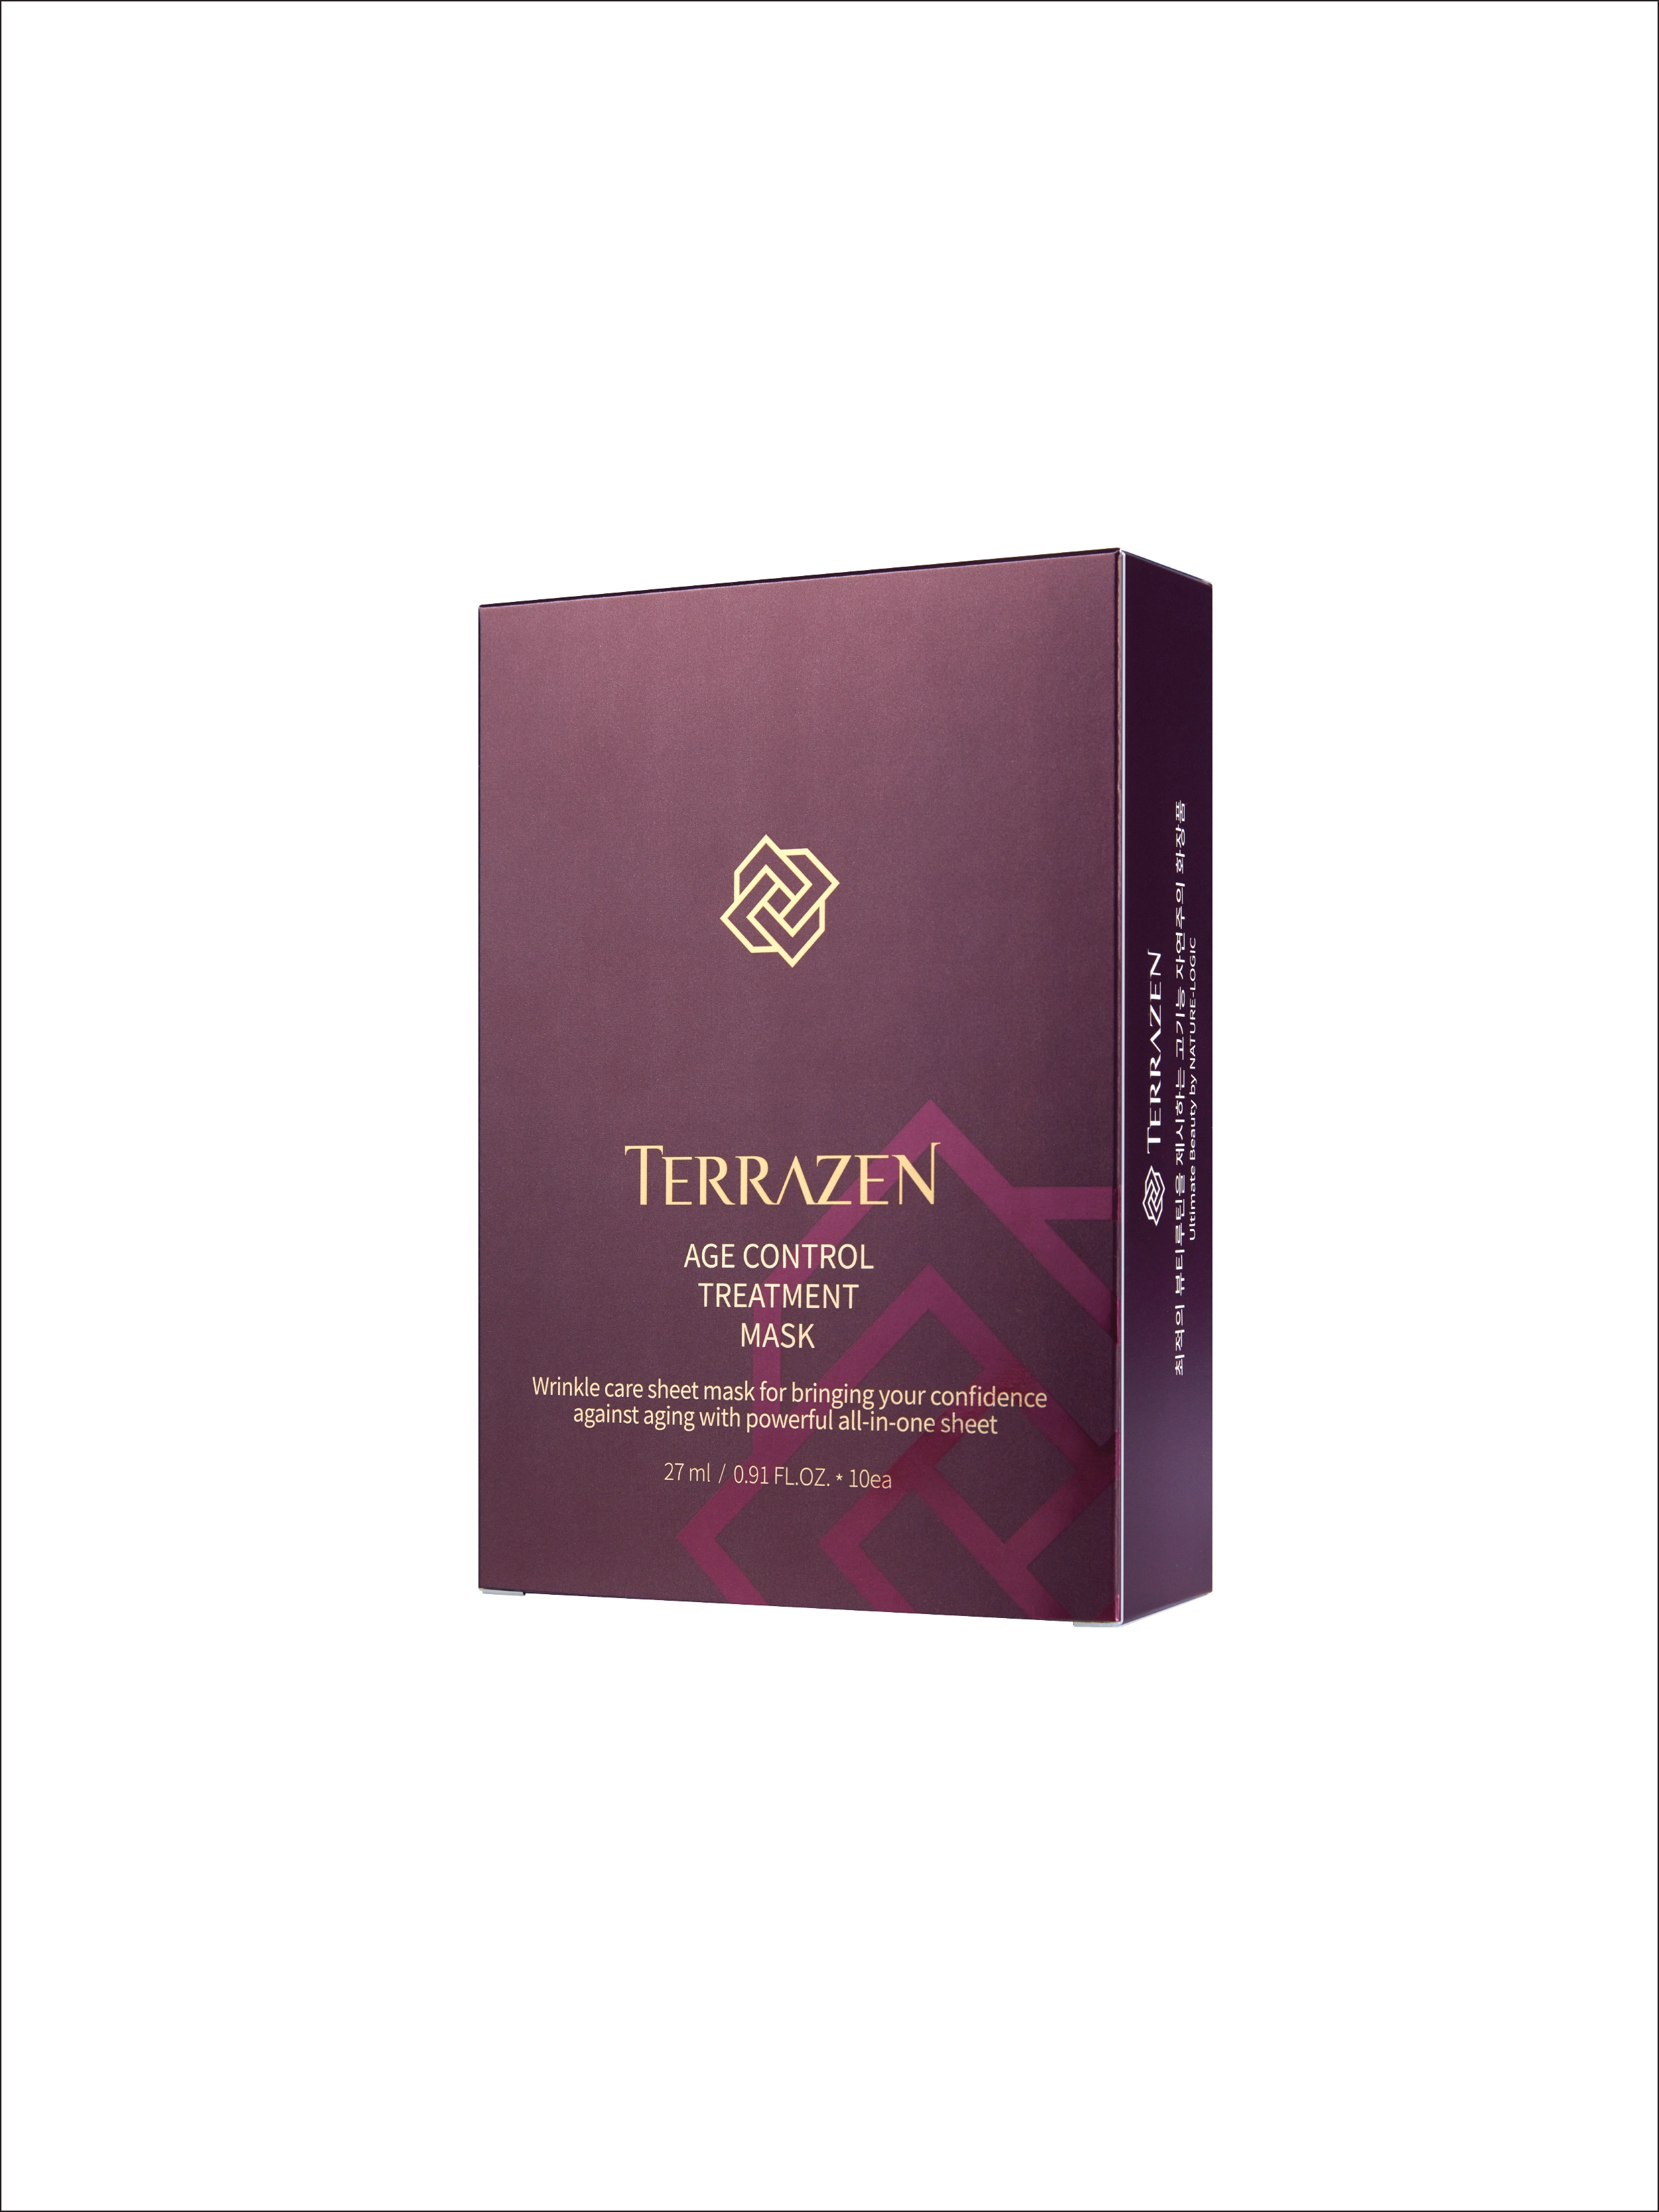 Terrazen Age Control Treatment Mask 10x27 mL